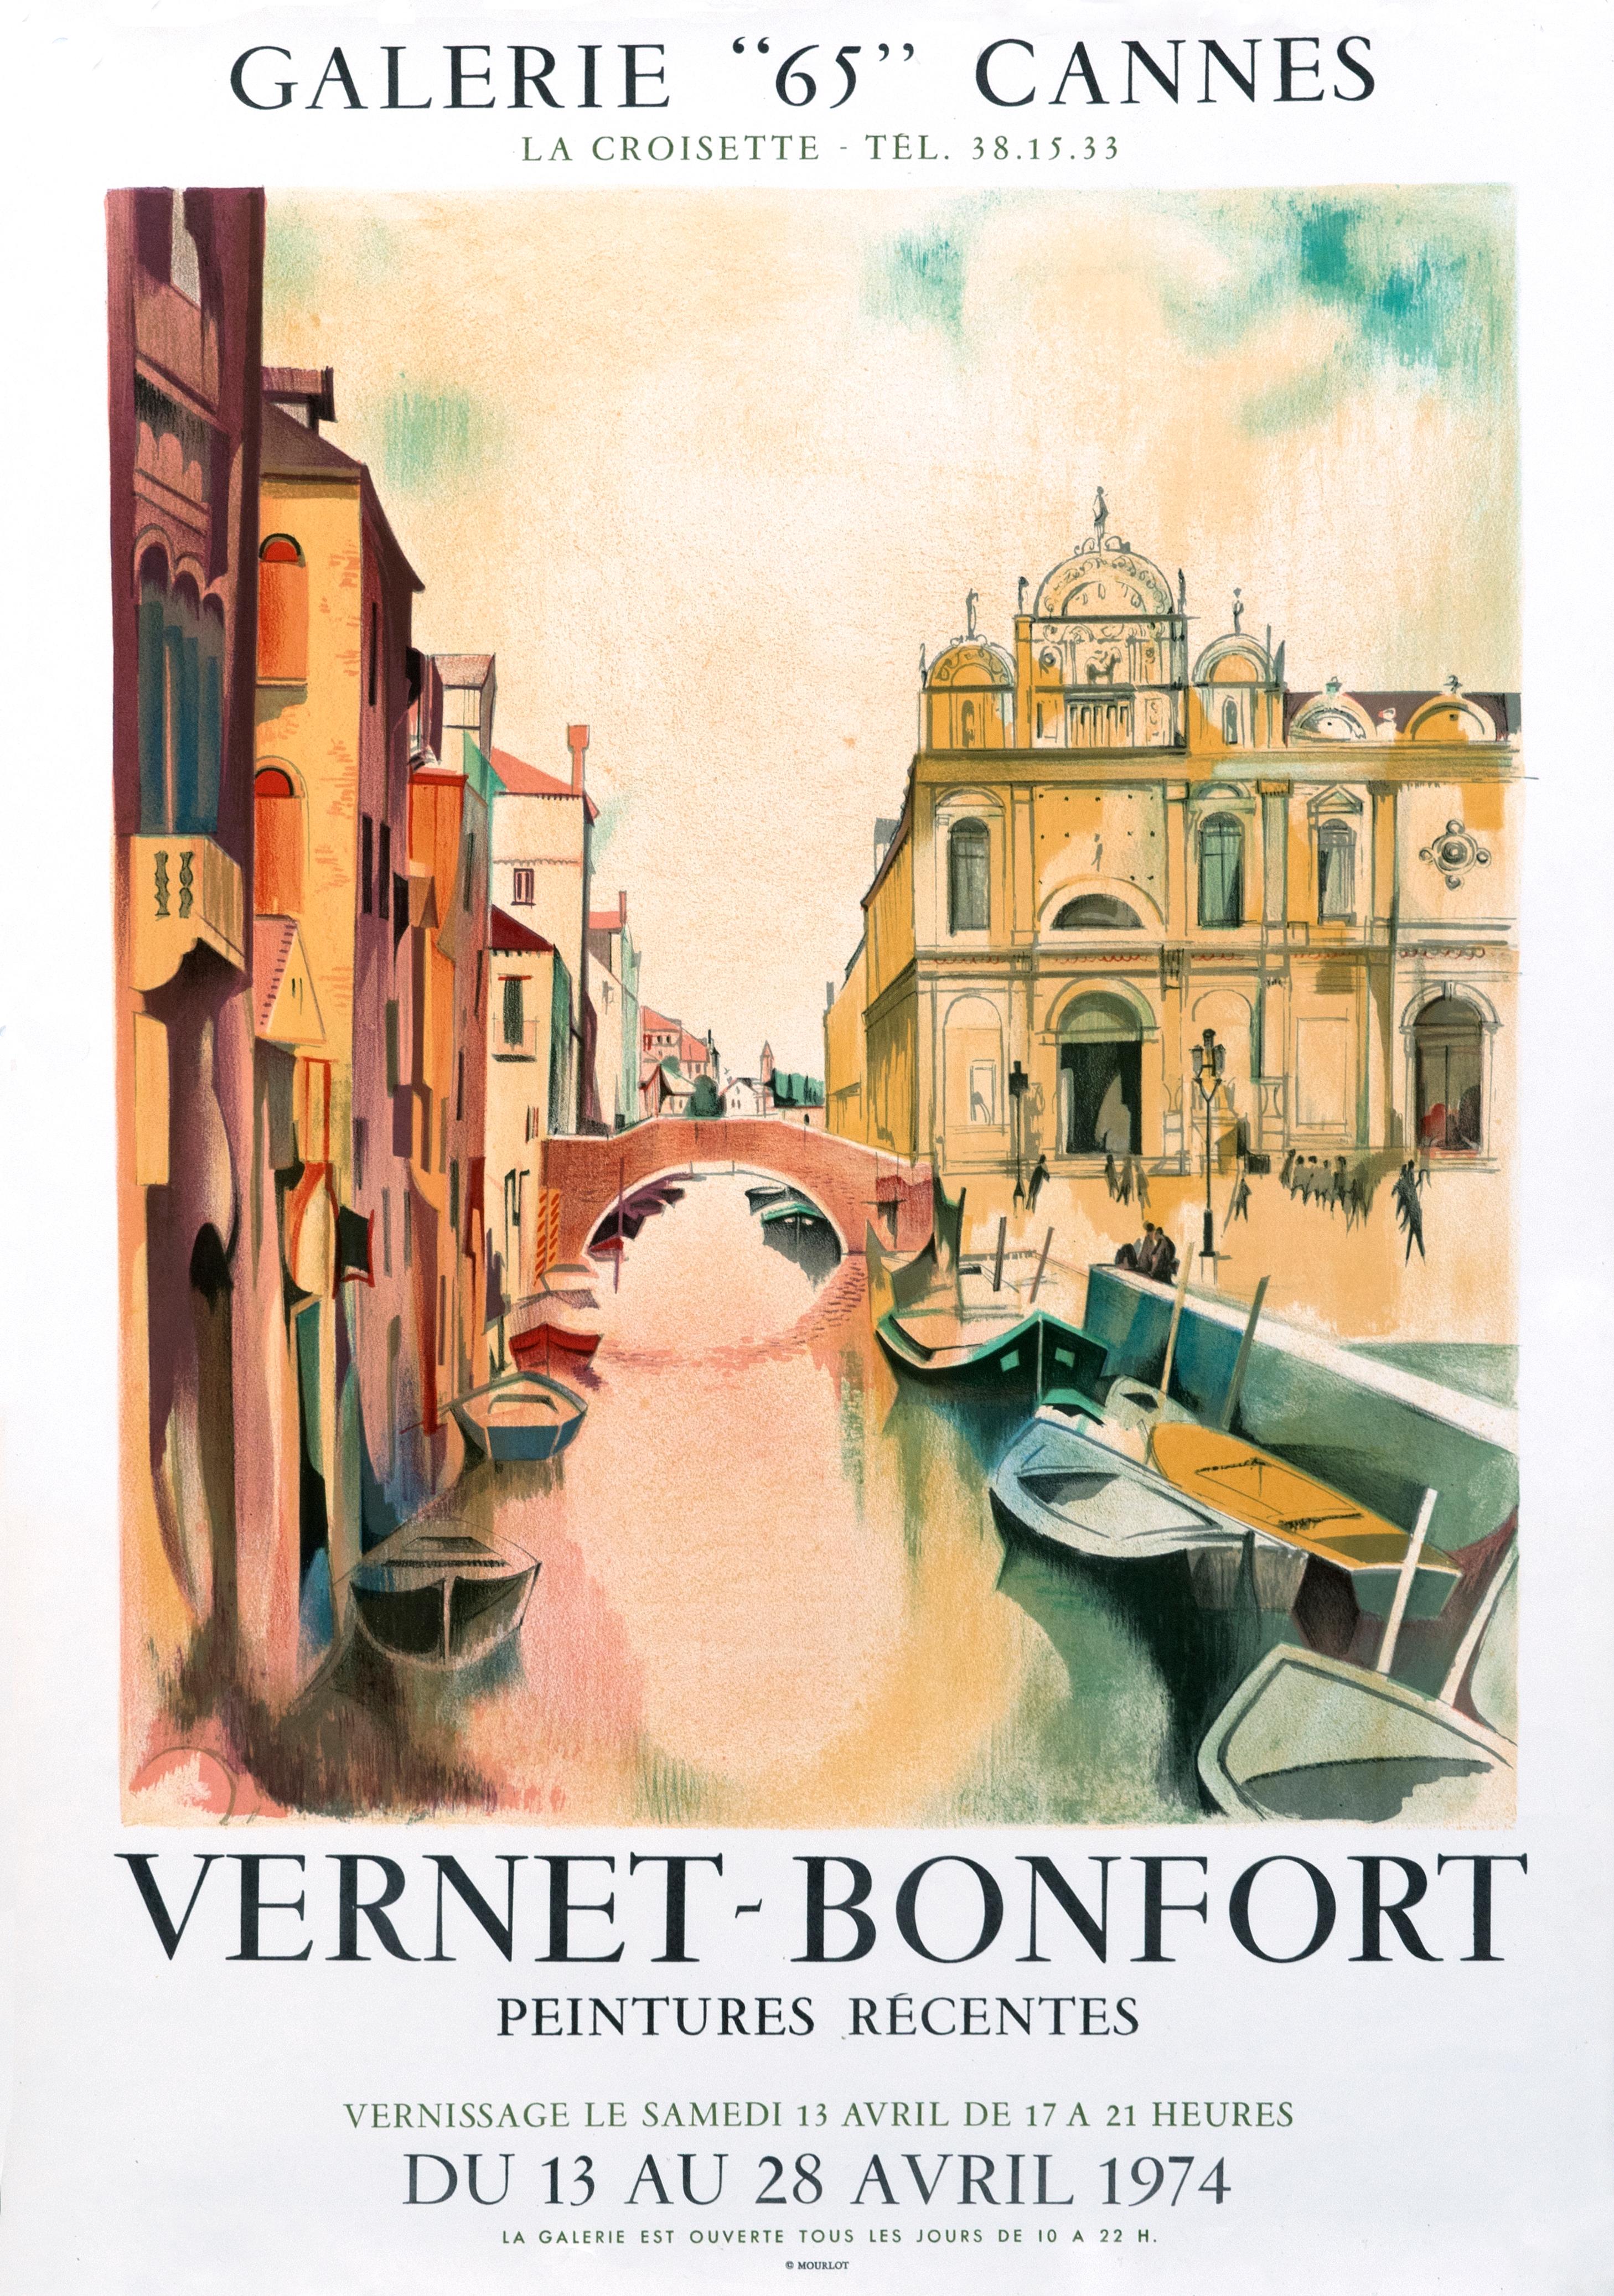 "Vernet-Bonfort - Galerie 65 Cannes" Original Vintage Exhibition Venice Poster